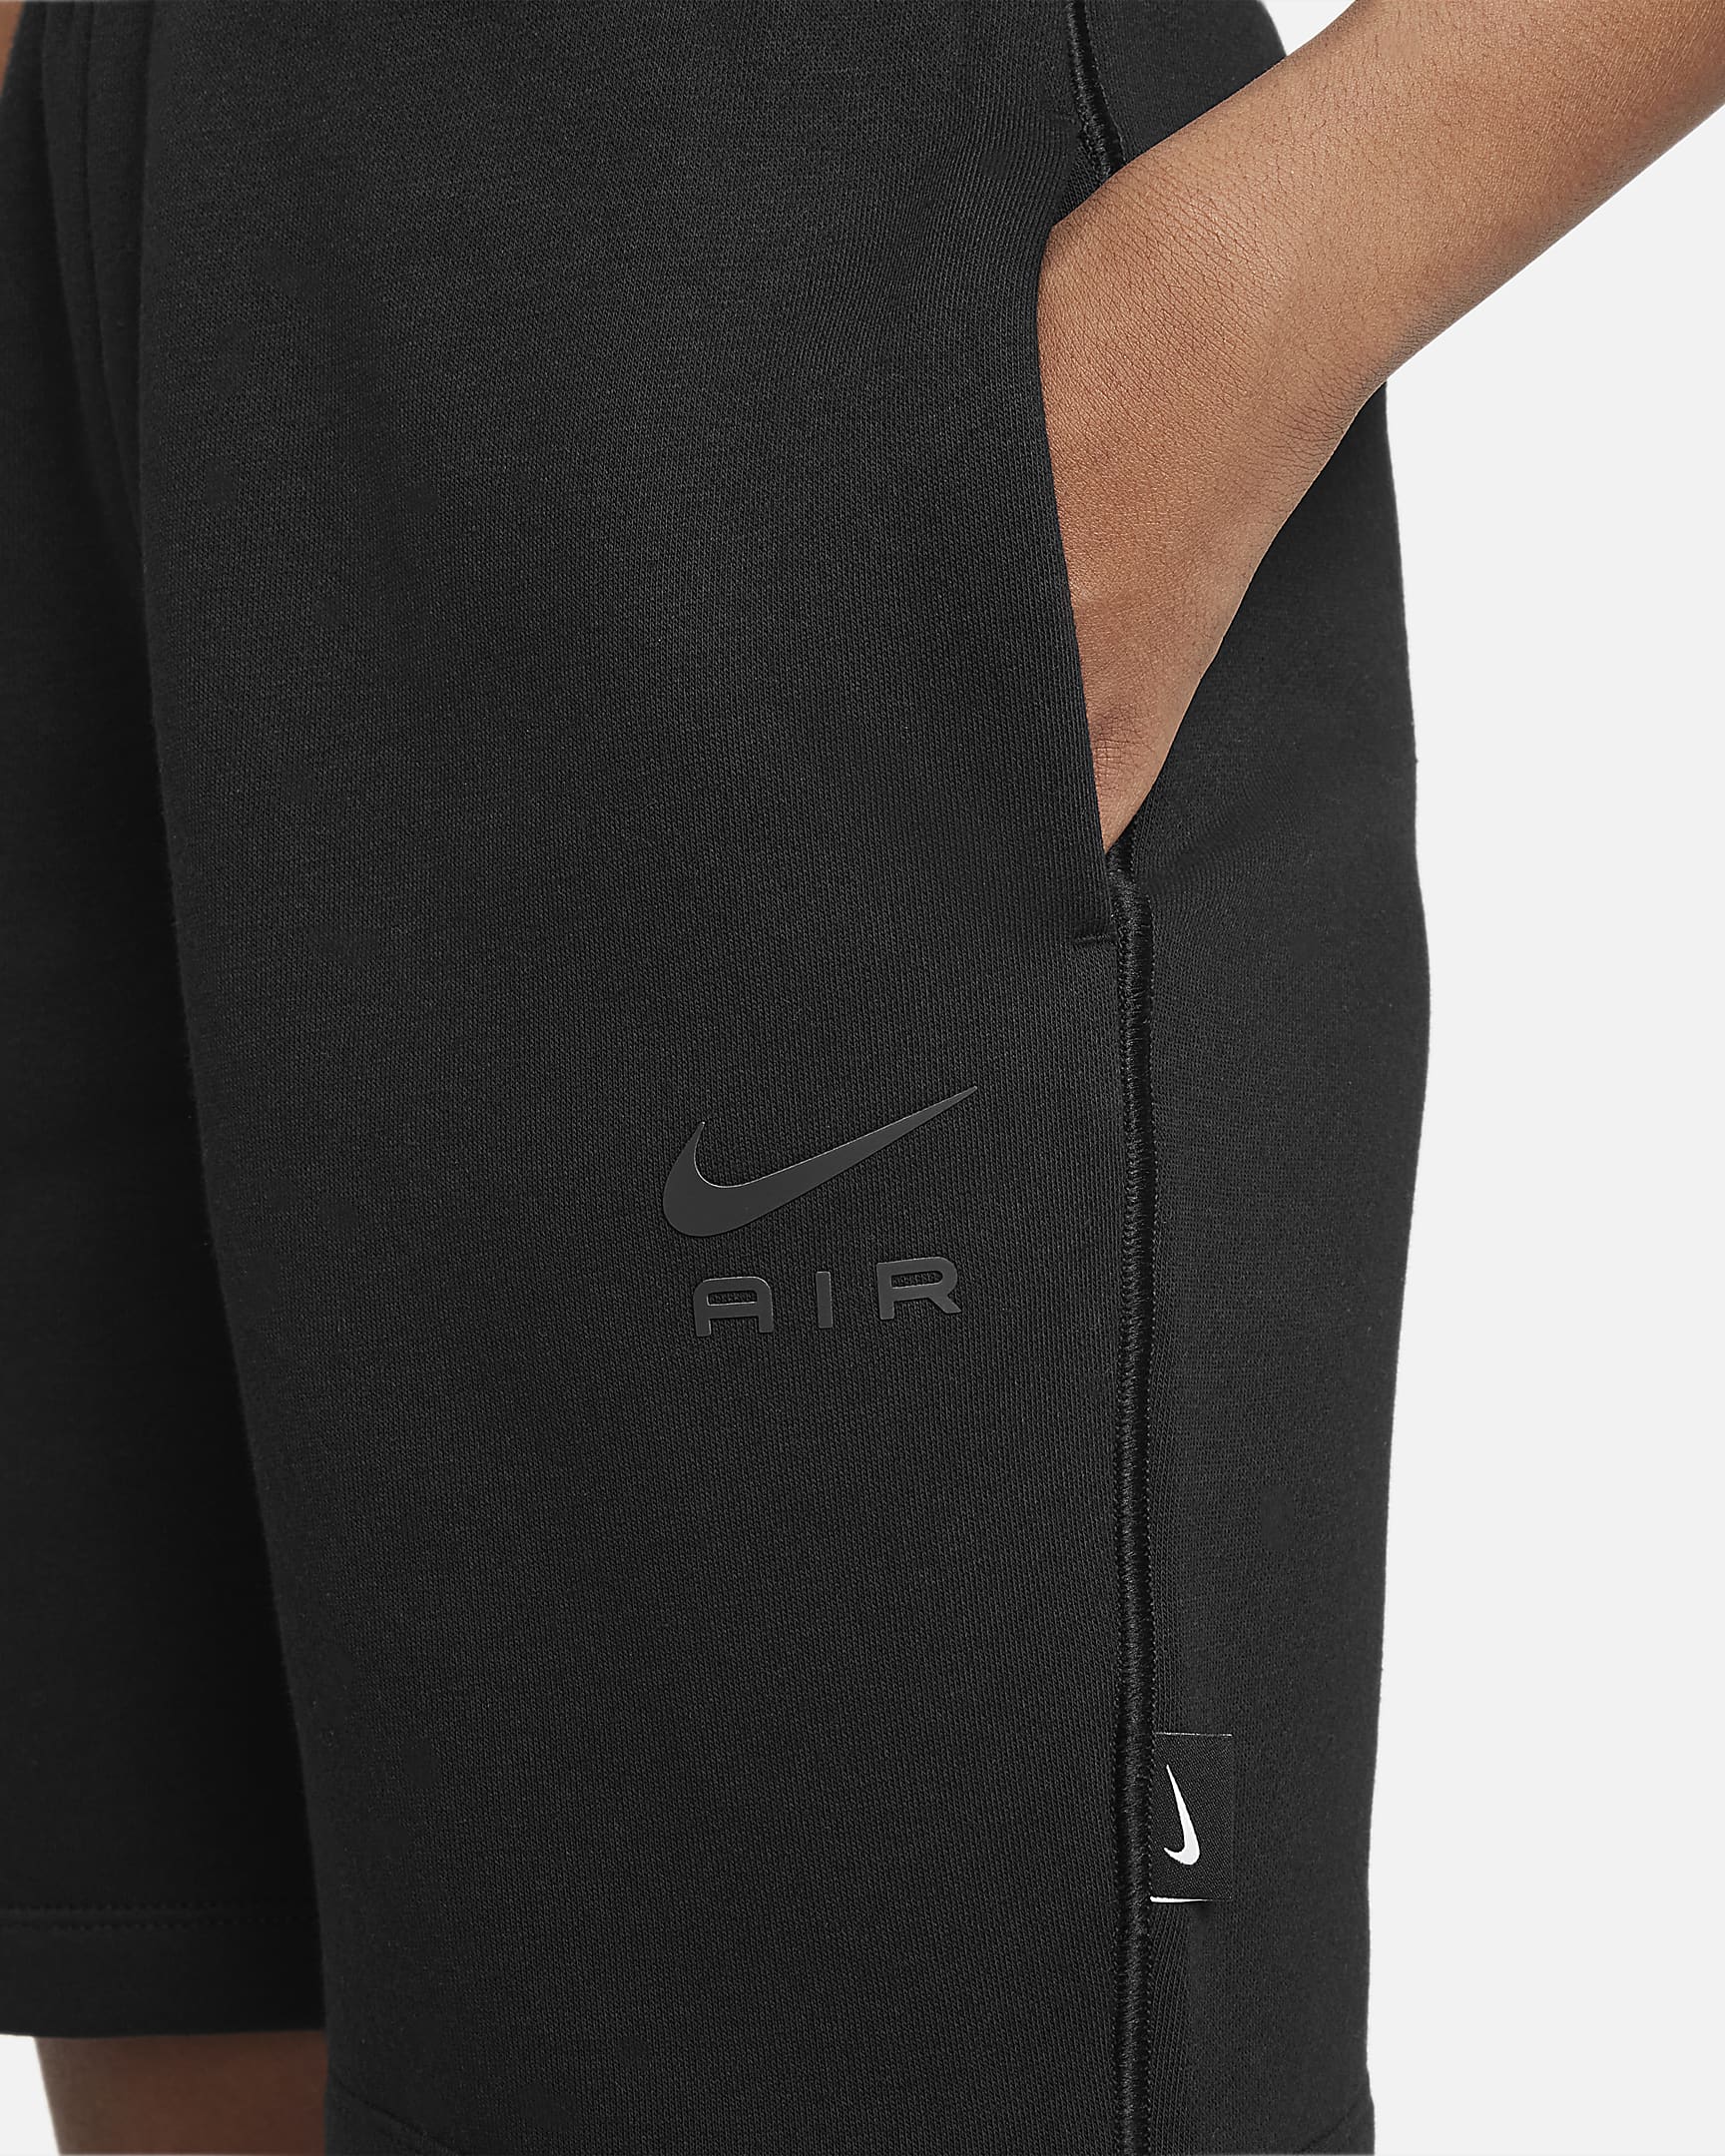 Shorts para niños talla grande Nike Air. Nike.com